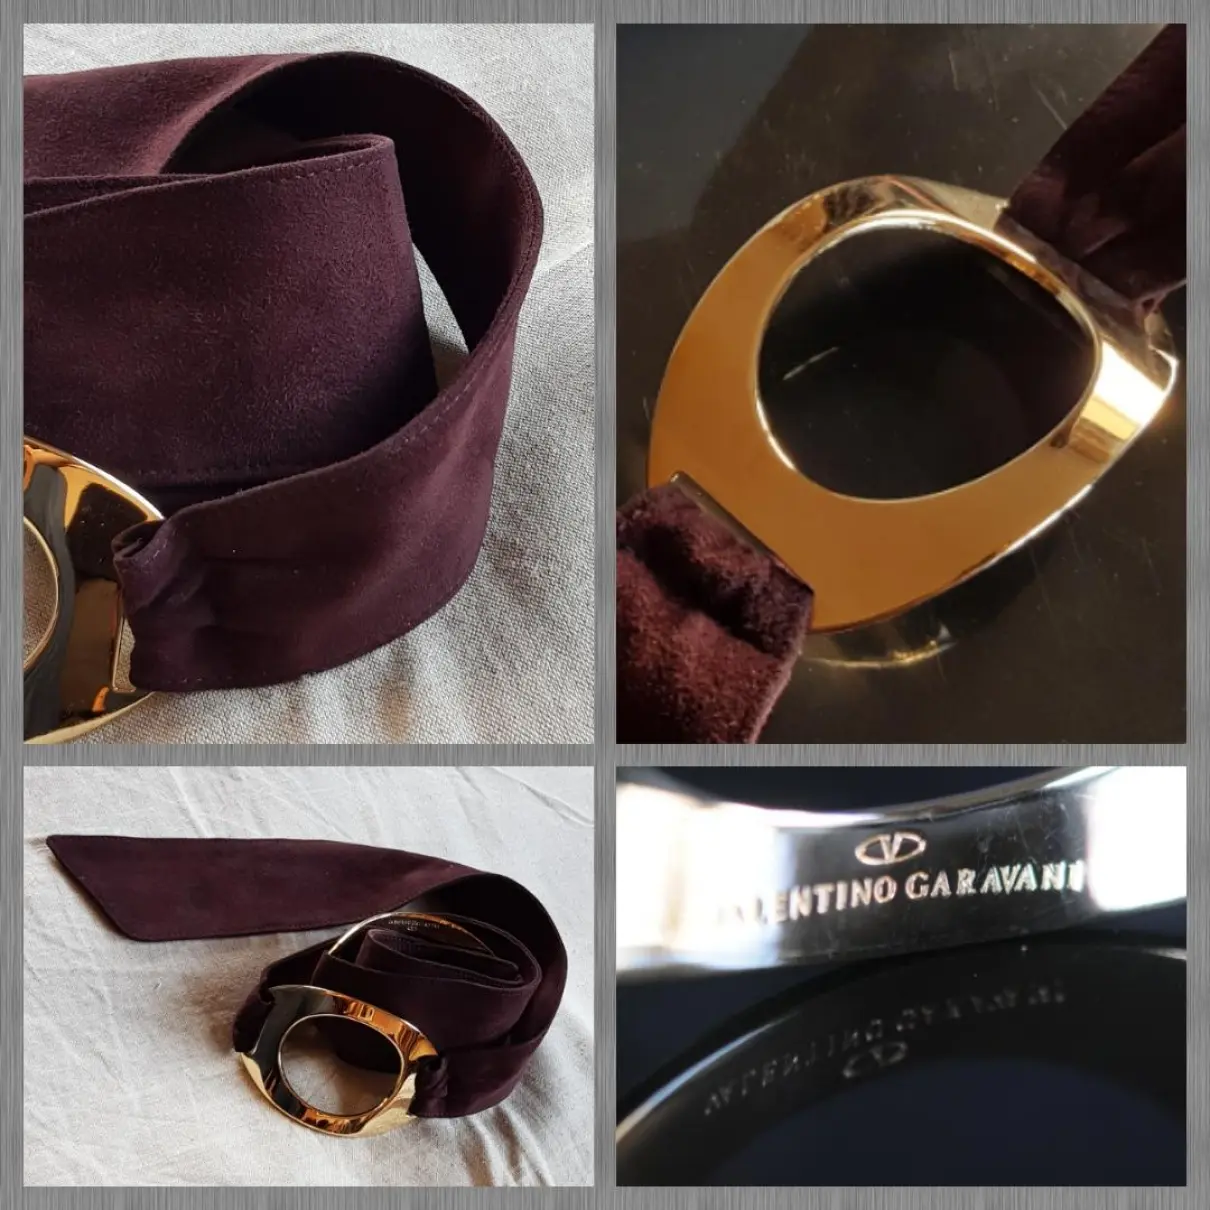 Buy Valentino Garavani Belt online - Vintage